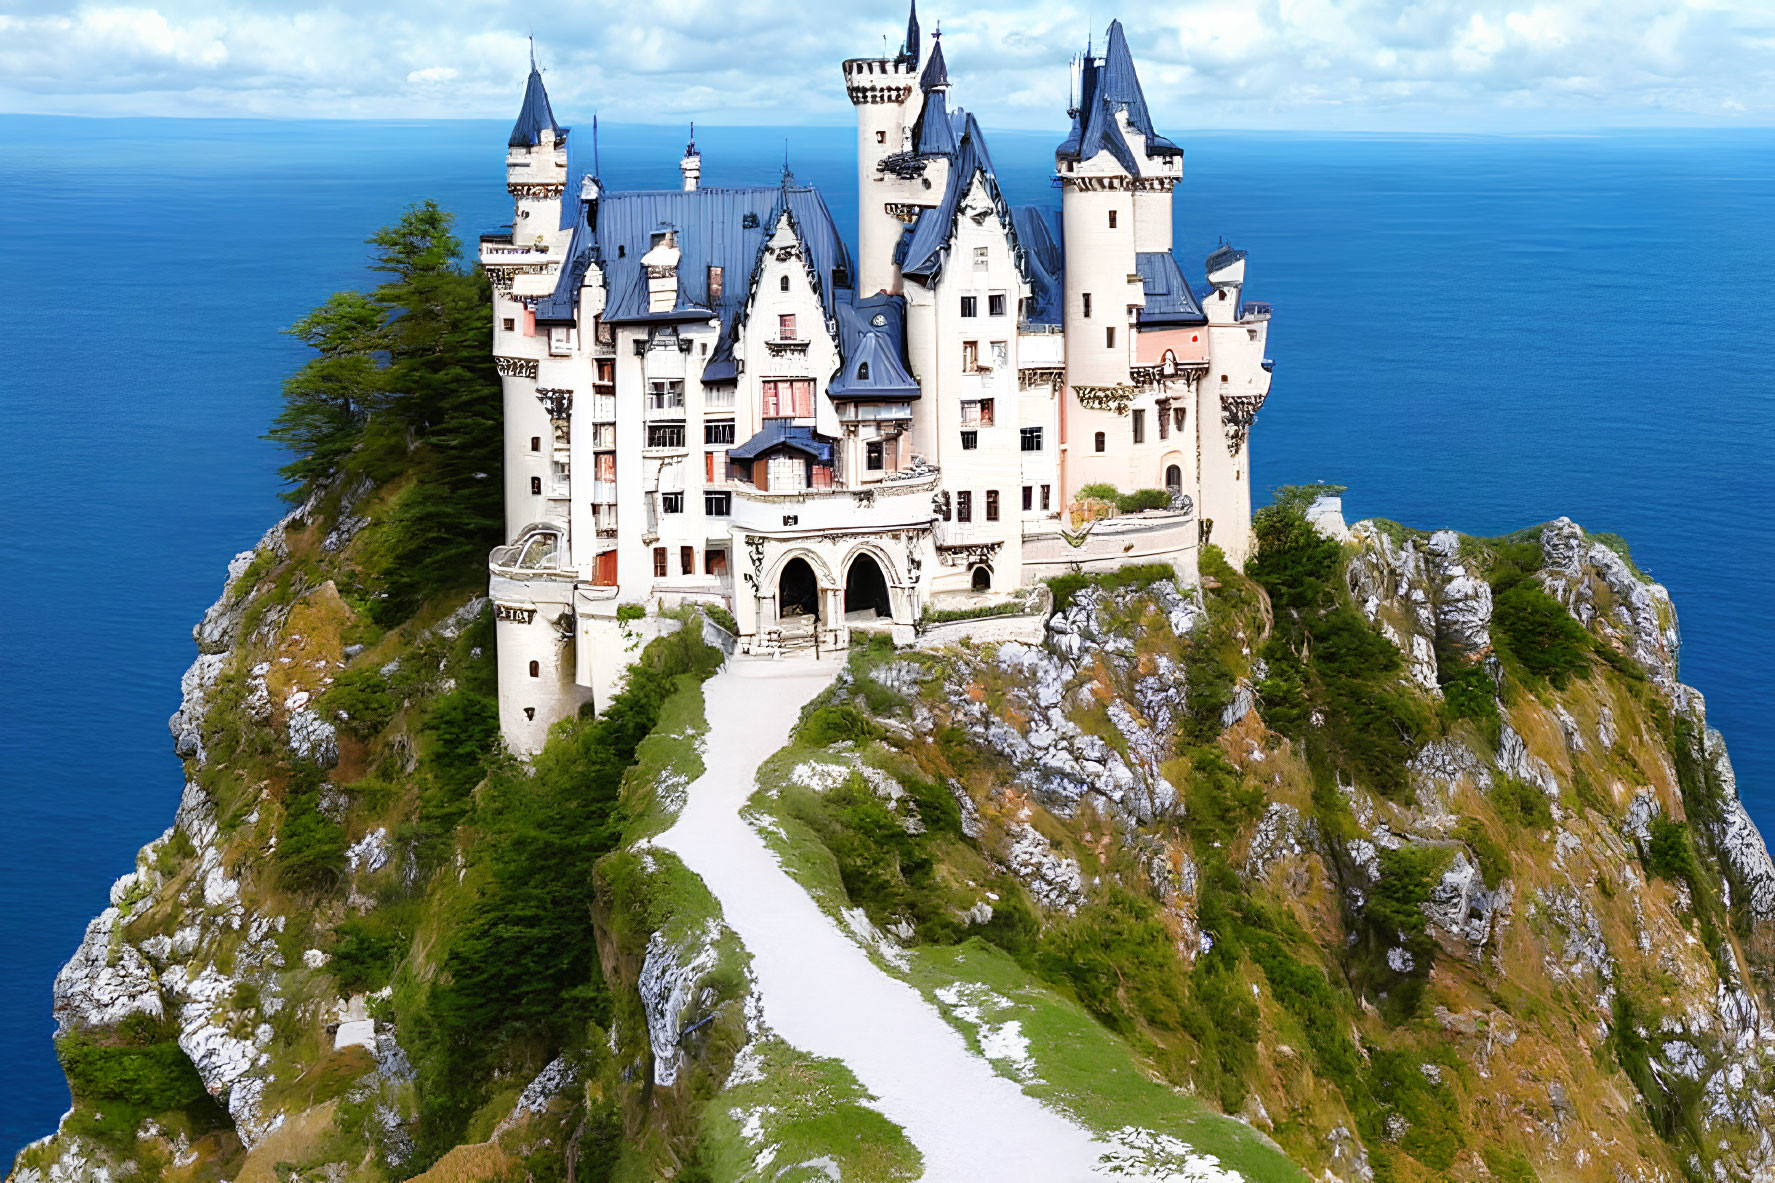 Cliff-top fairy-tale castle overlooking ocean and sky